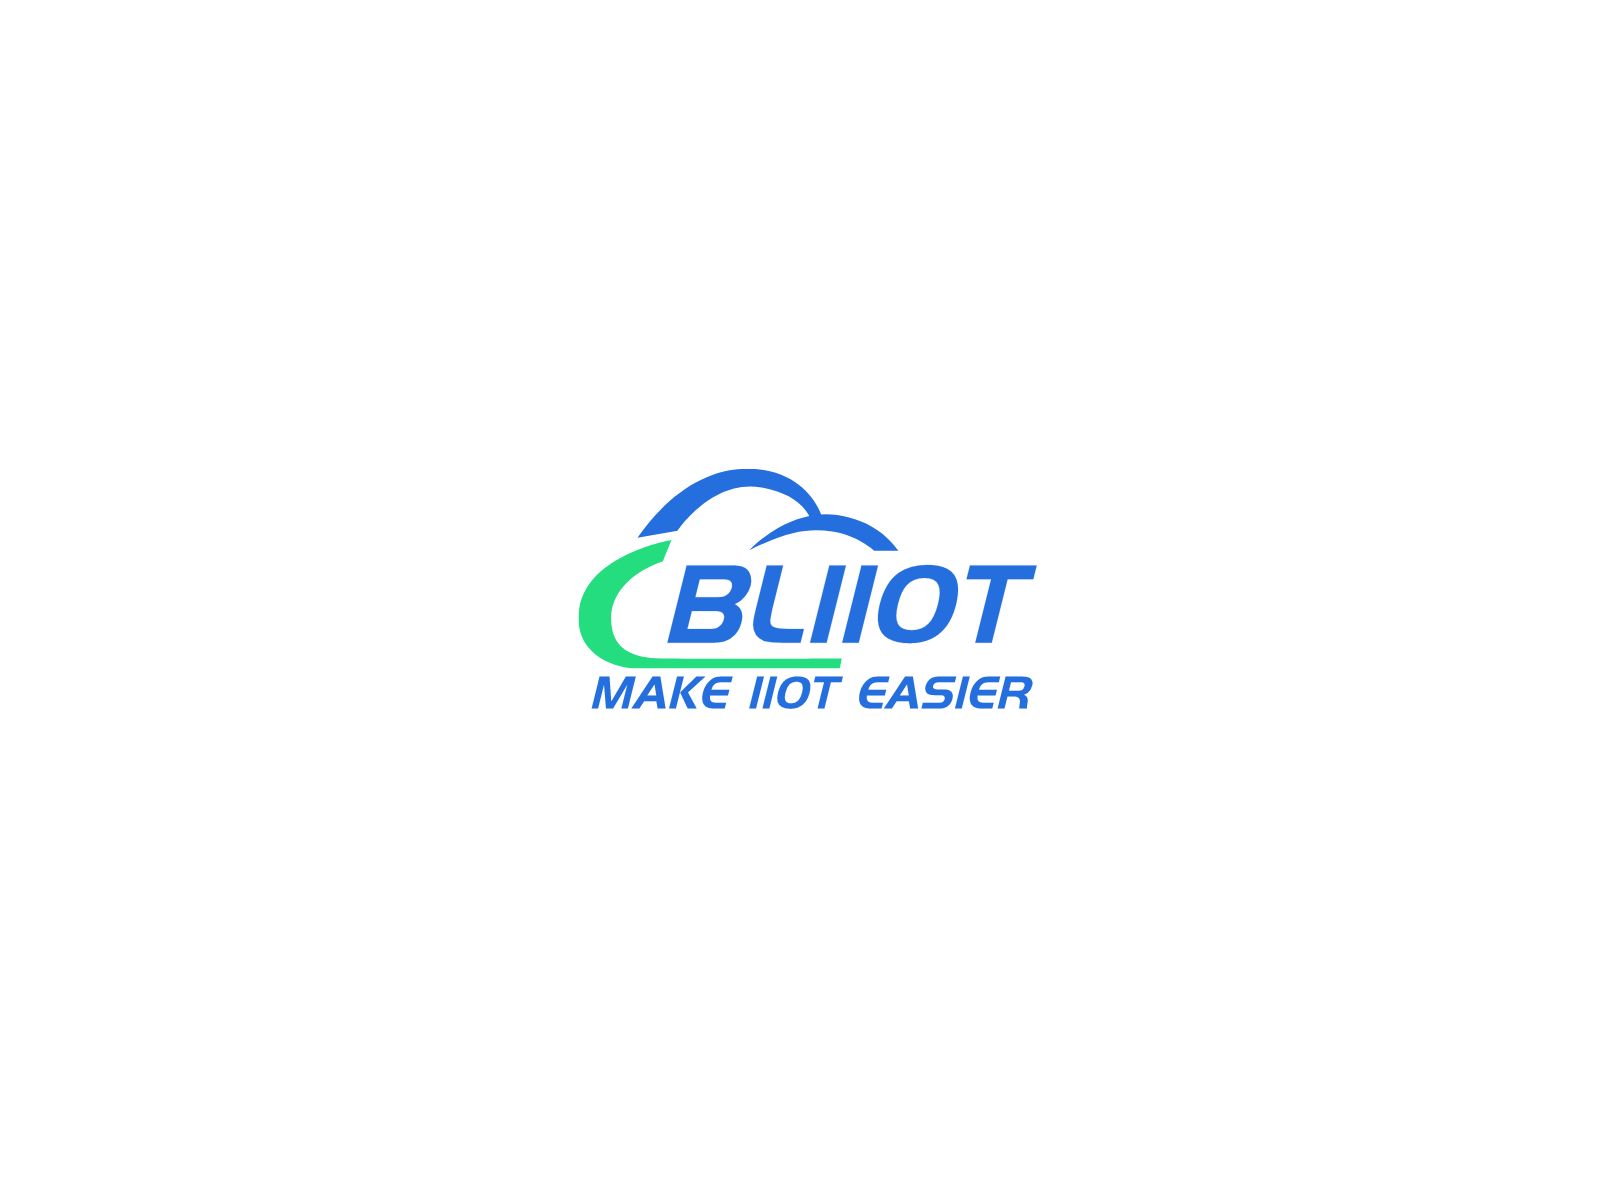 BLIIOT technology